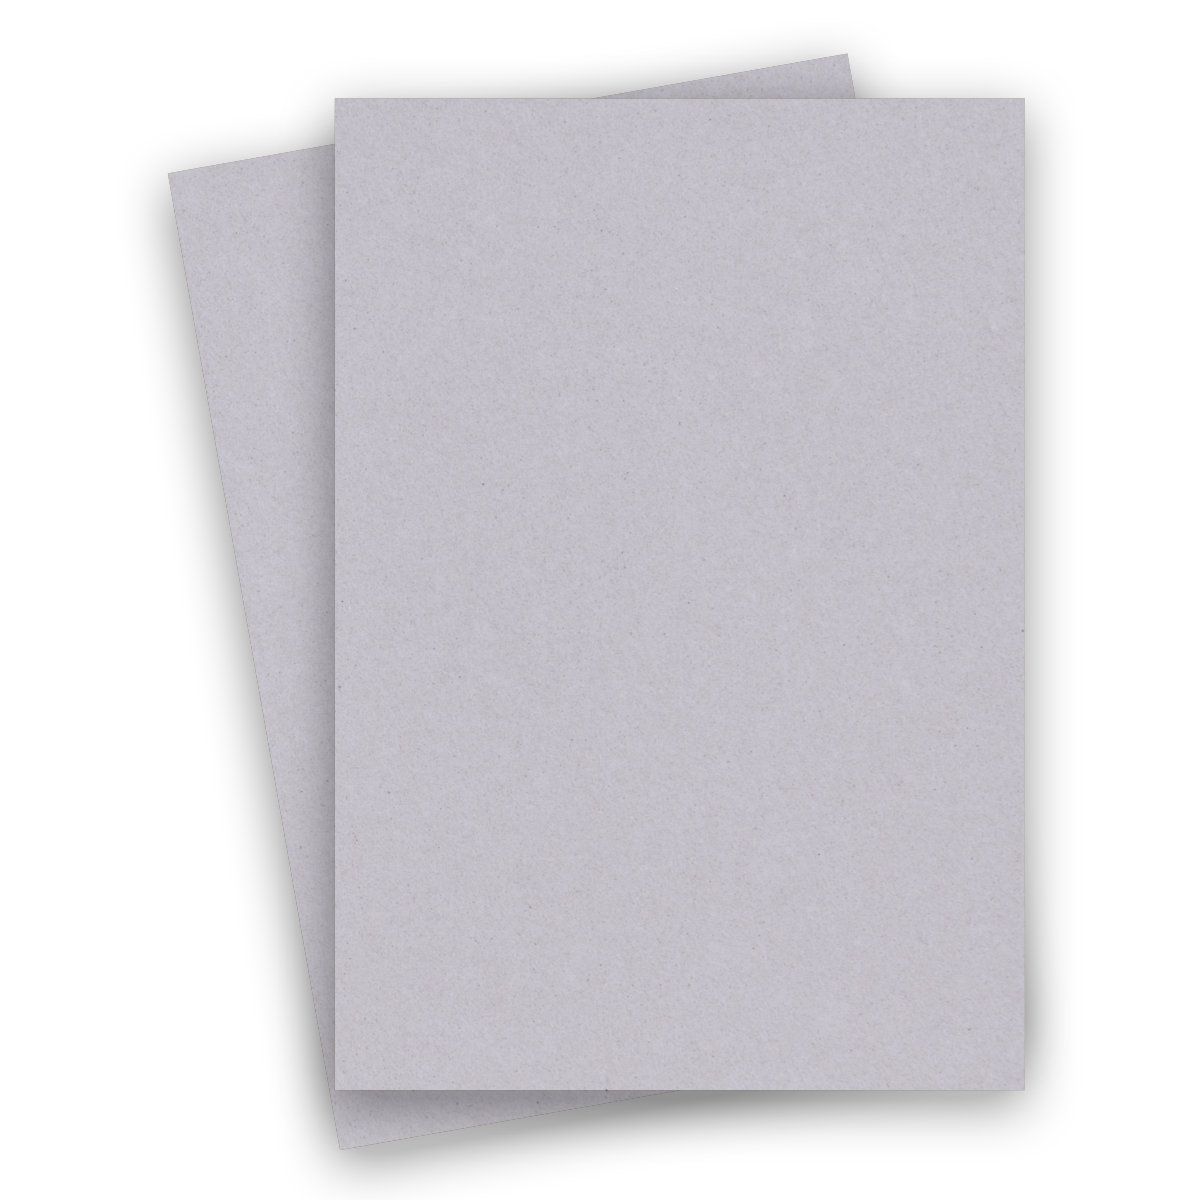 Crush White Corn - 8.5X11 (Letter) Card Stock Paper - 130lb Cover (350gsm)